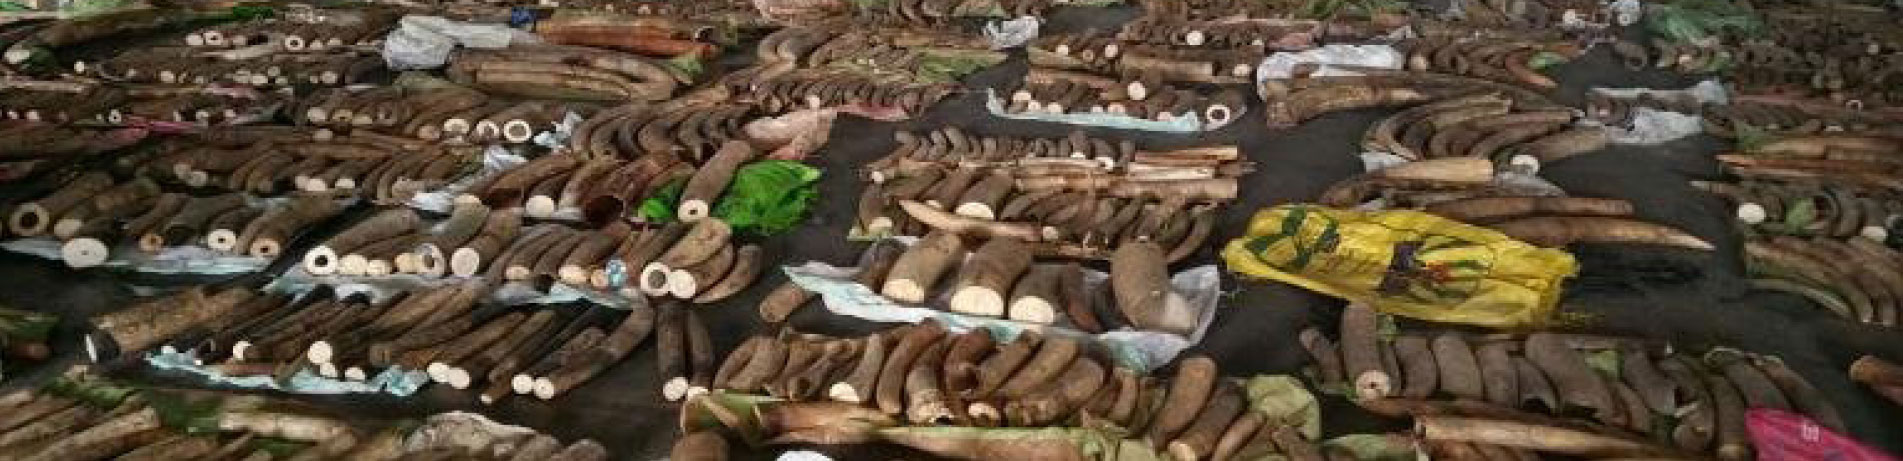 Seizure of ivory tusks, rhino horns and big cat teeth on display